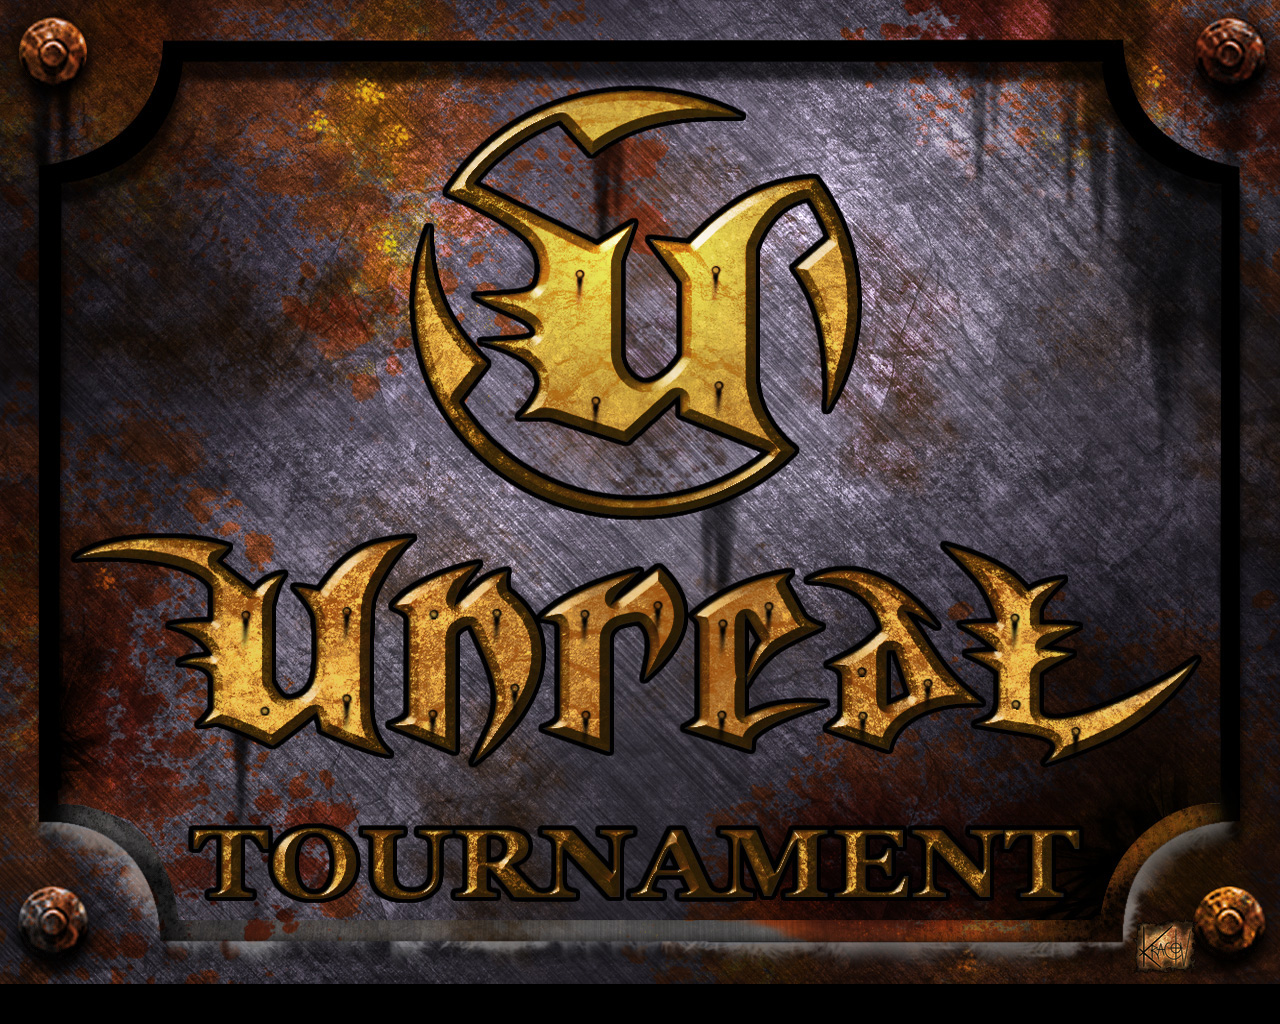 unreal tournament 99 logo